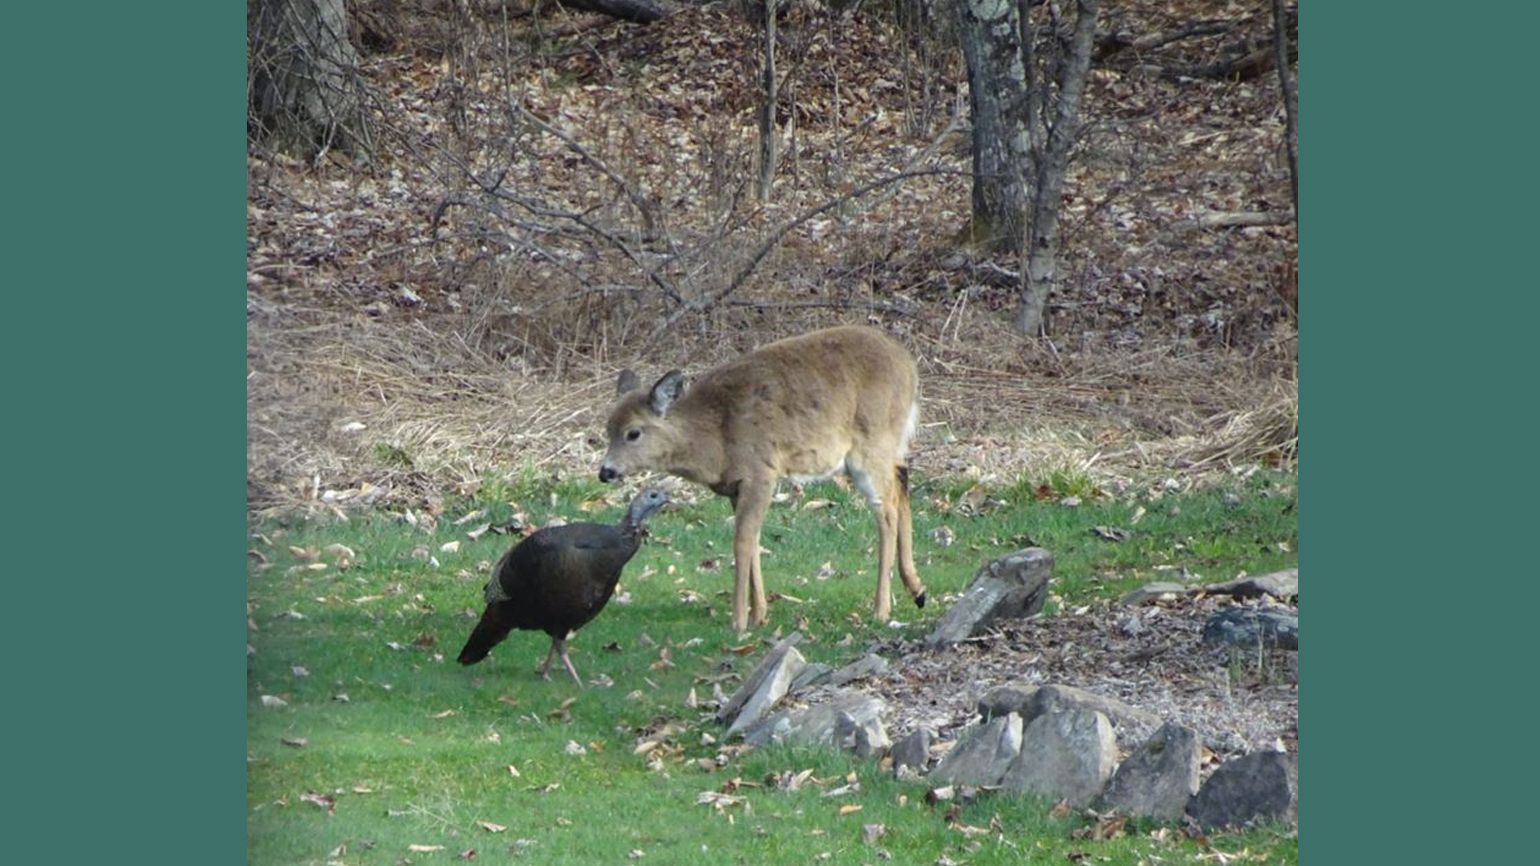 Forest friends meet in our backyard.